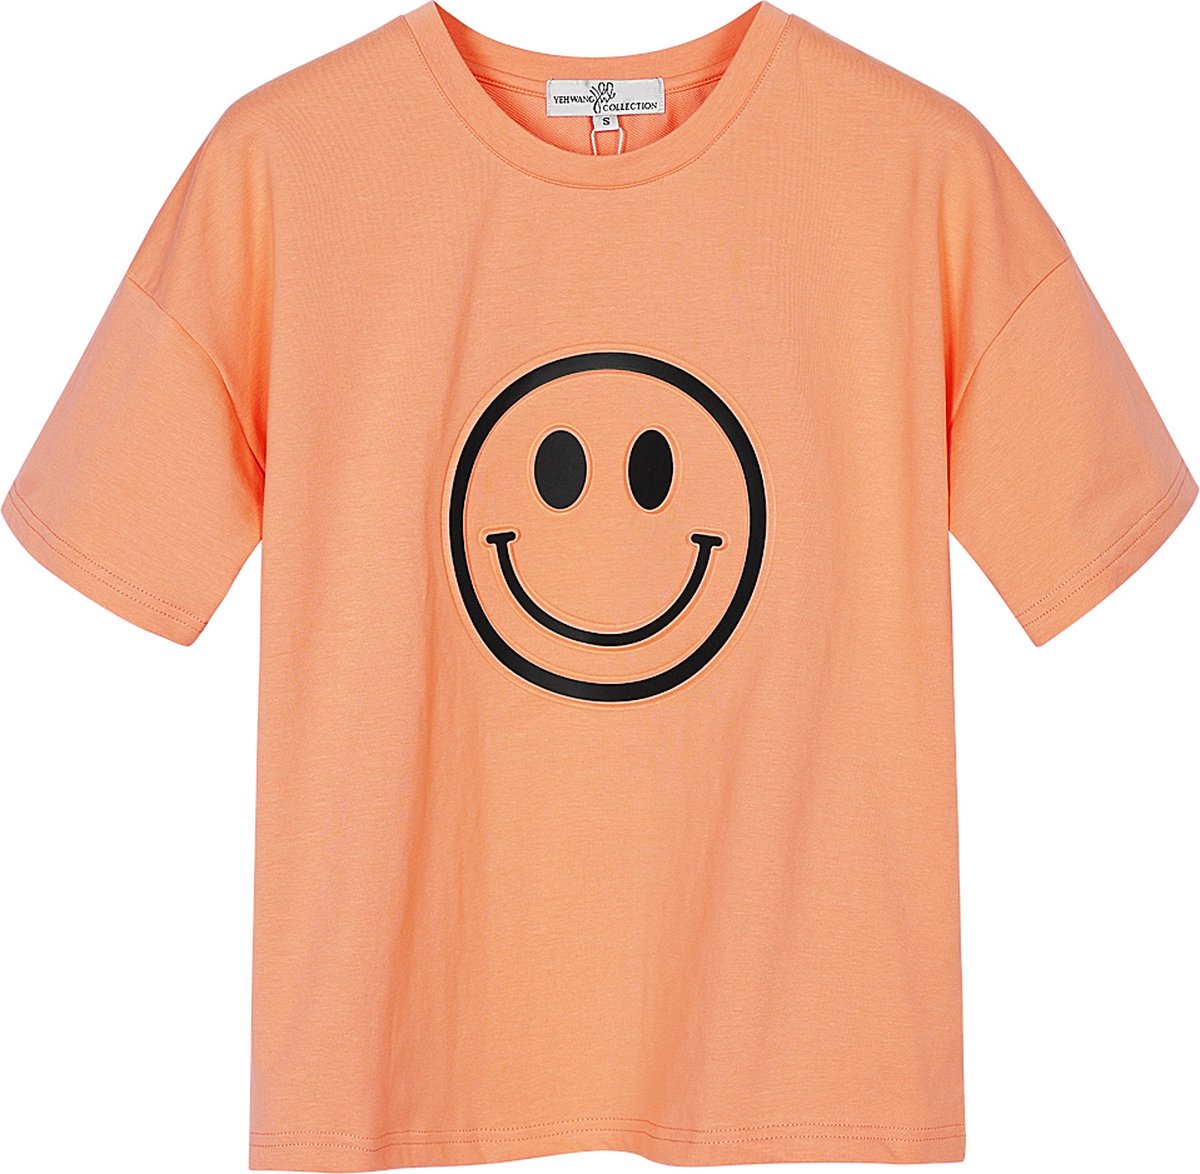 Yehwang - T-shirt met smiley - Oranje - Maat: M